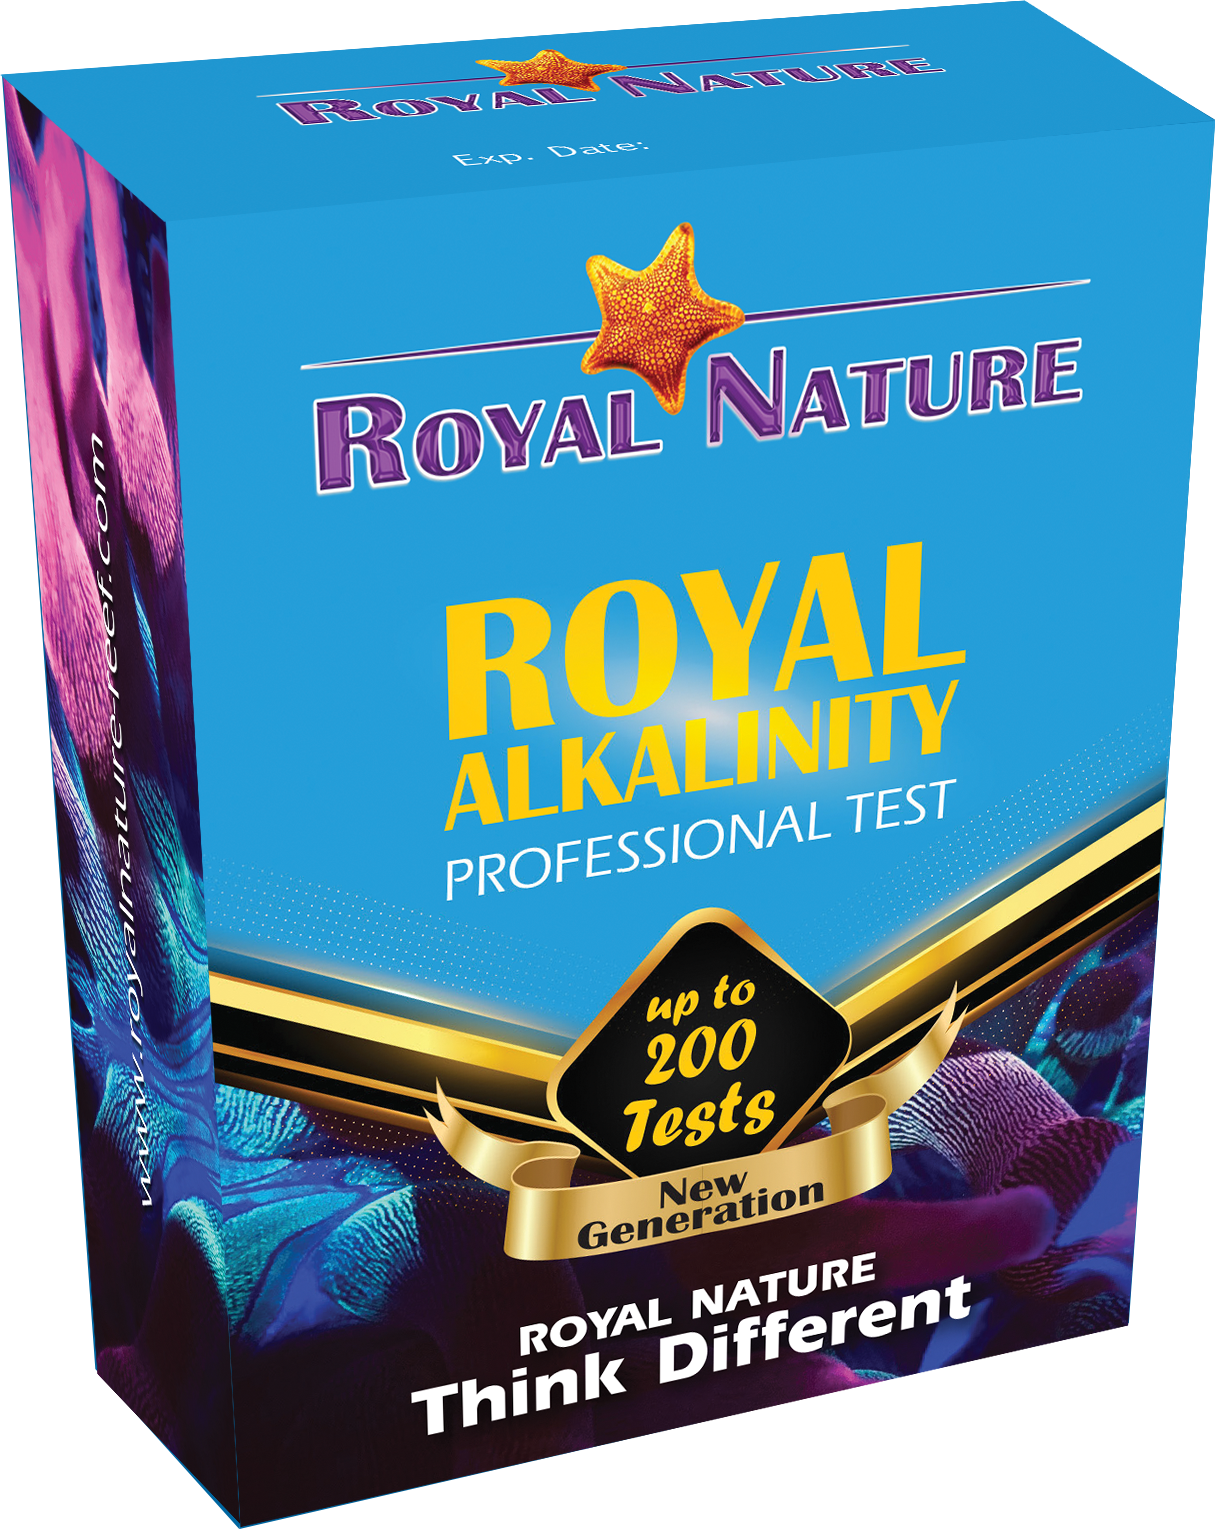 royal-alkalinity-professional-test-200t